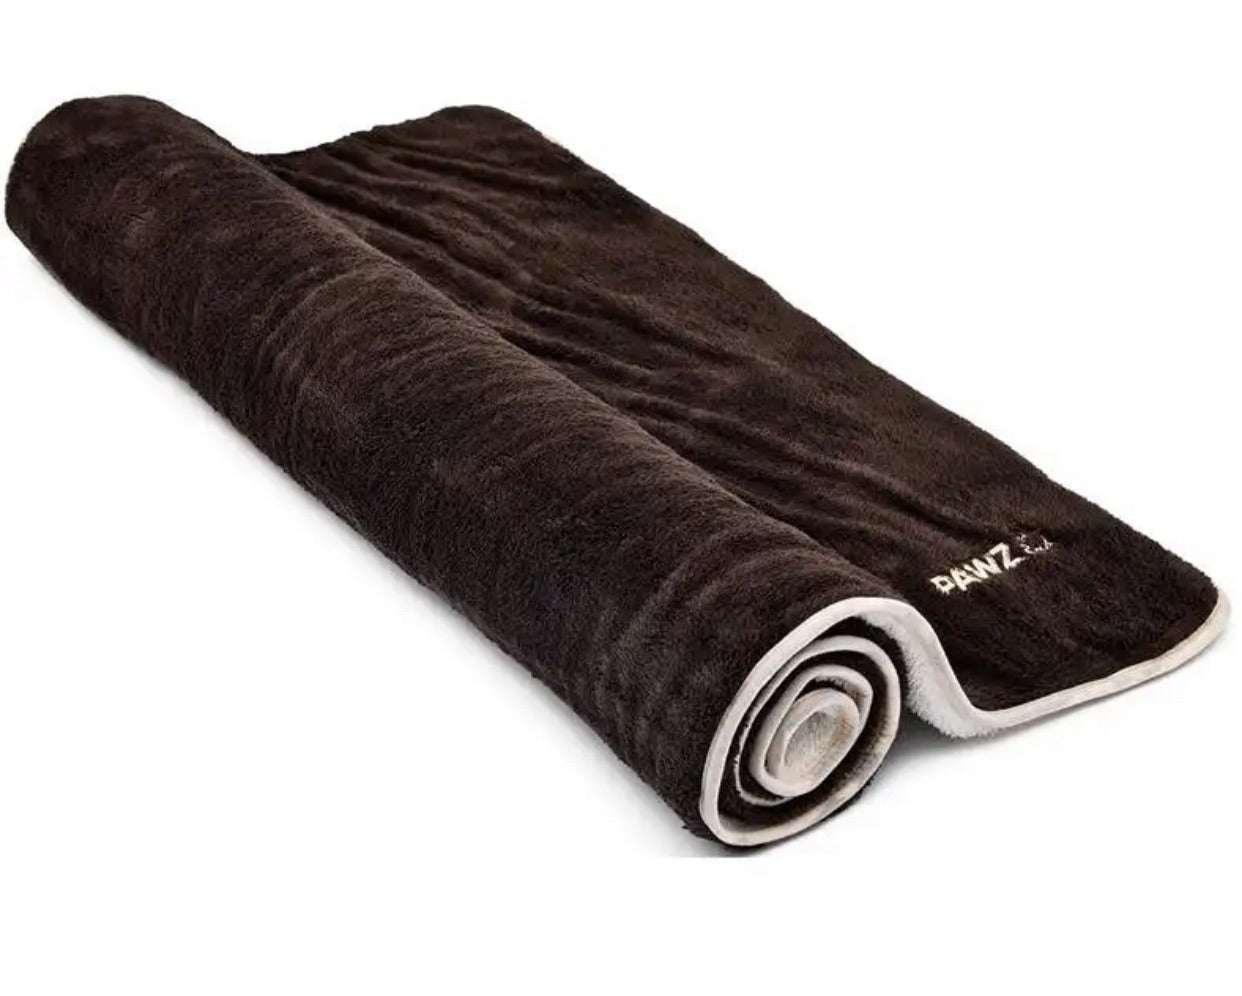 Pawz Dog Fleece Bath Towel - Camel/Brown